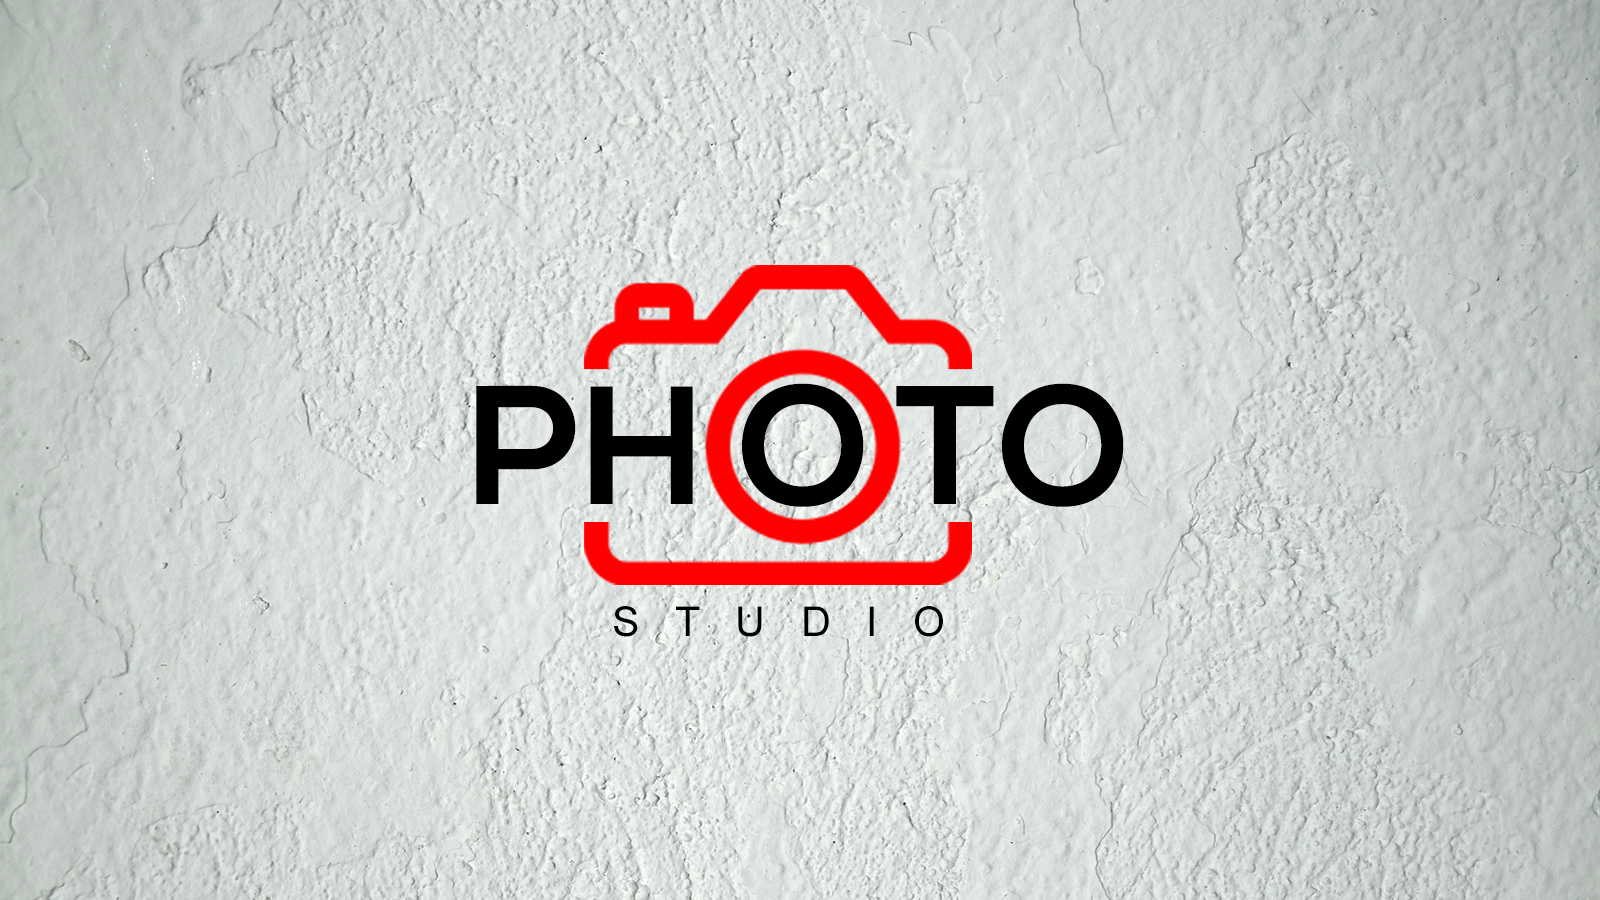 photography logo design psd